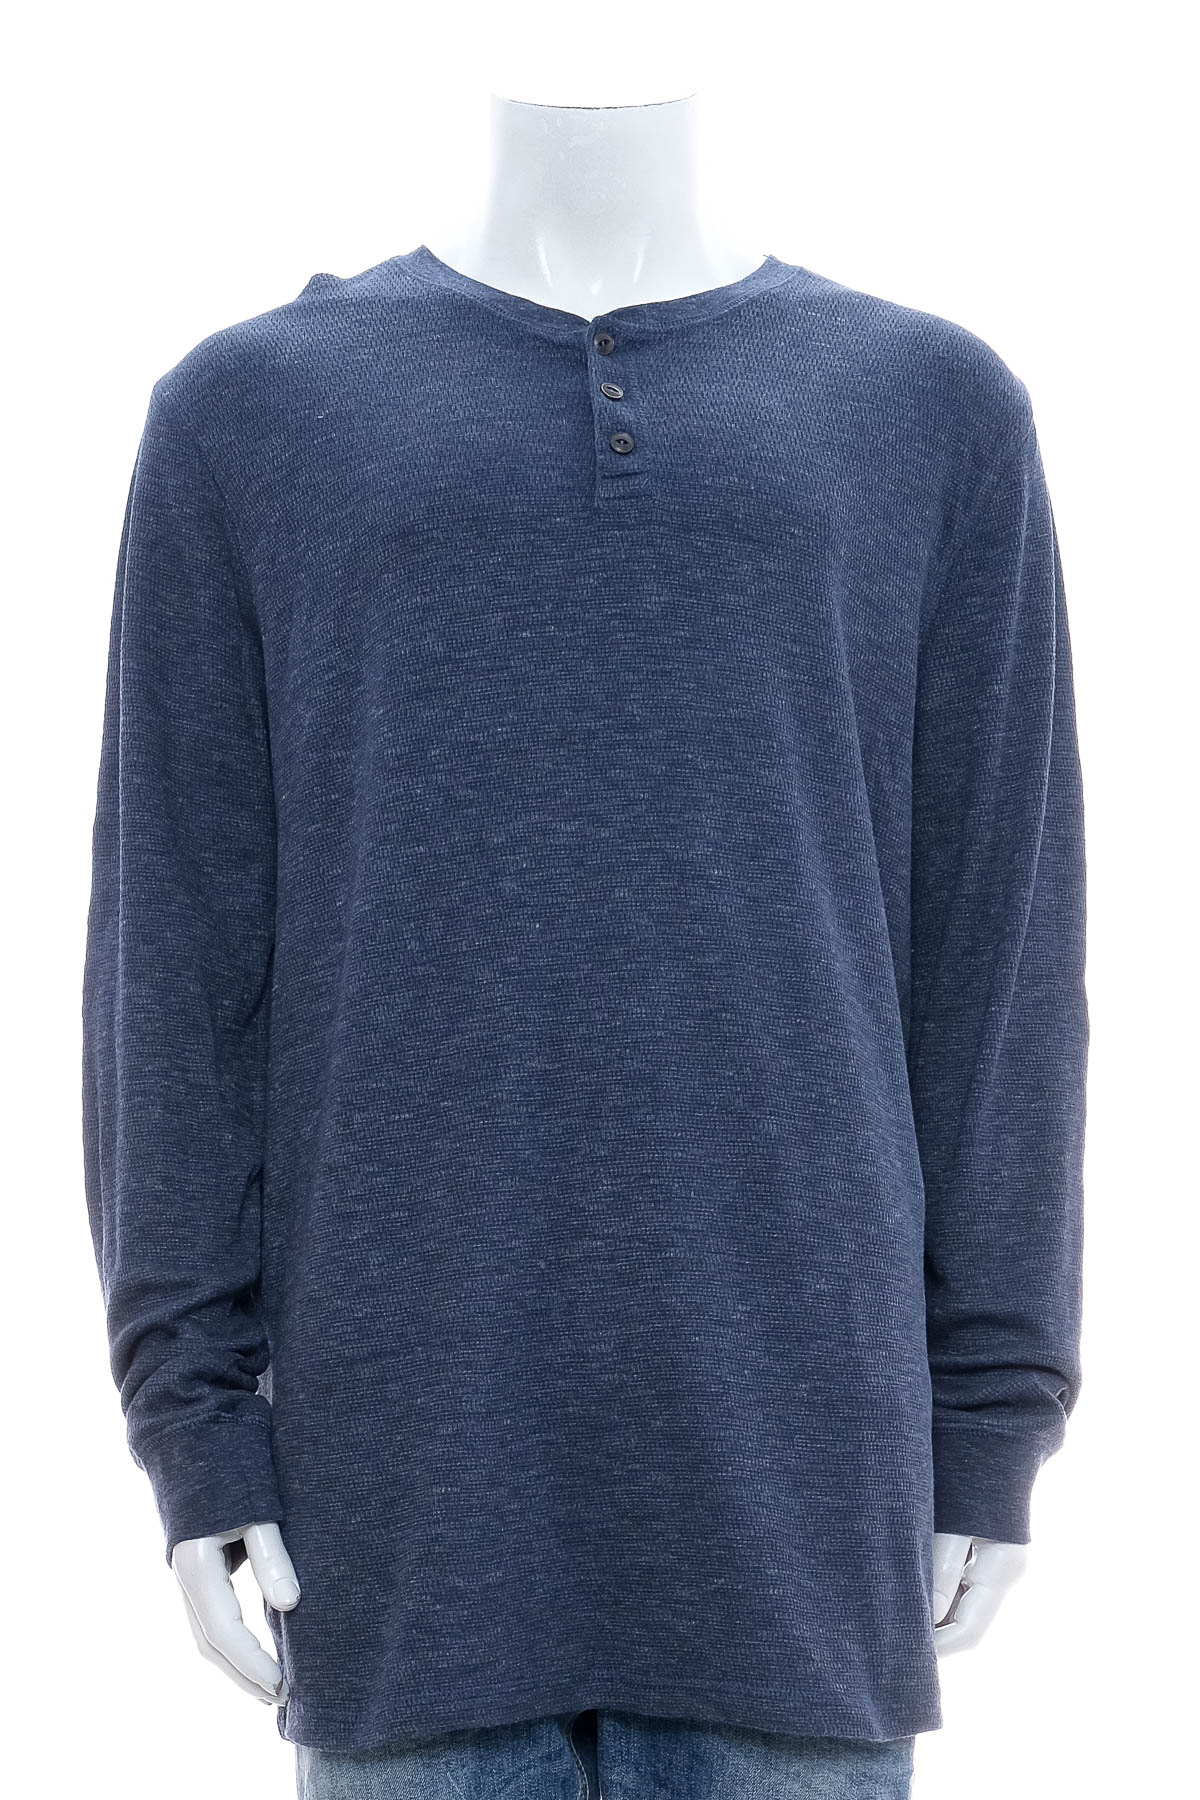 Men's sweater - GEORGE - 0